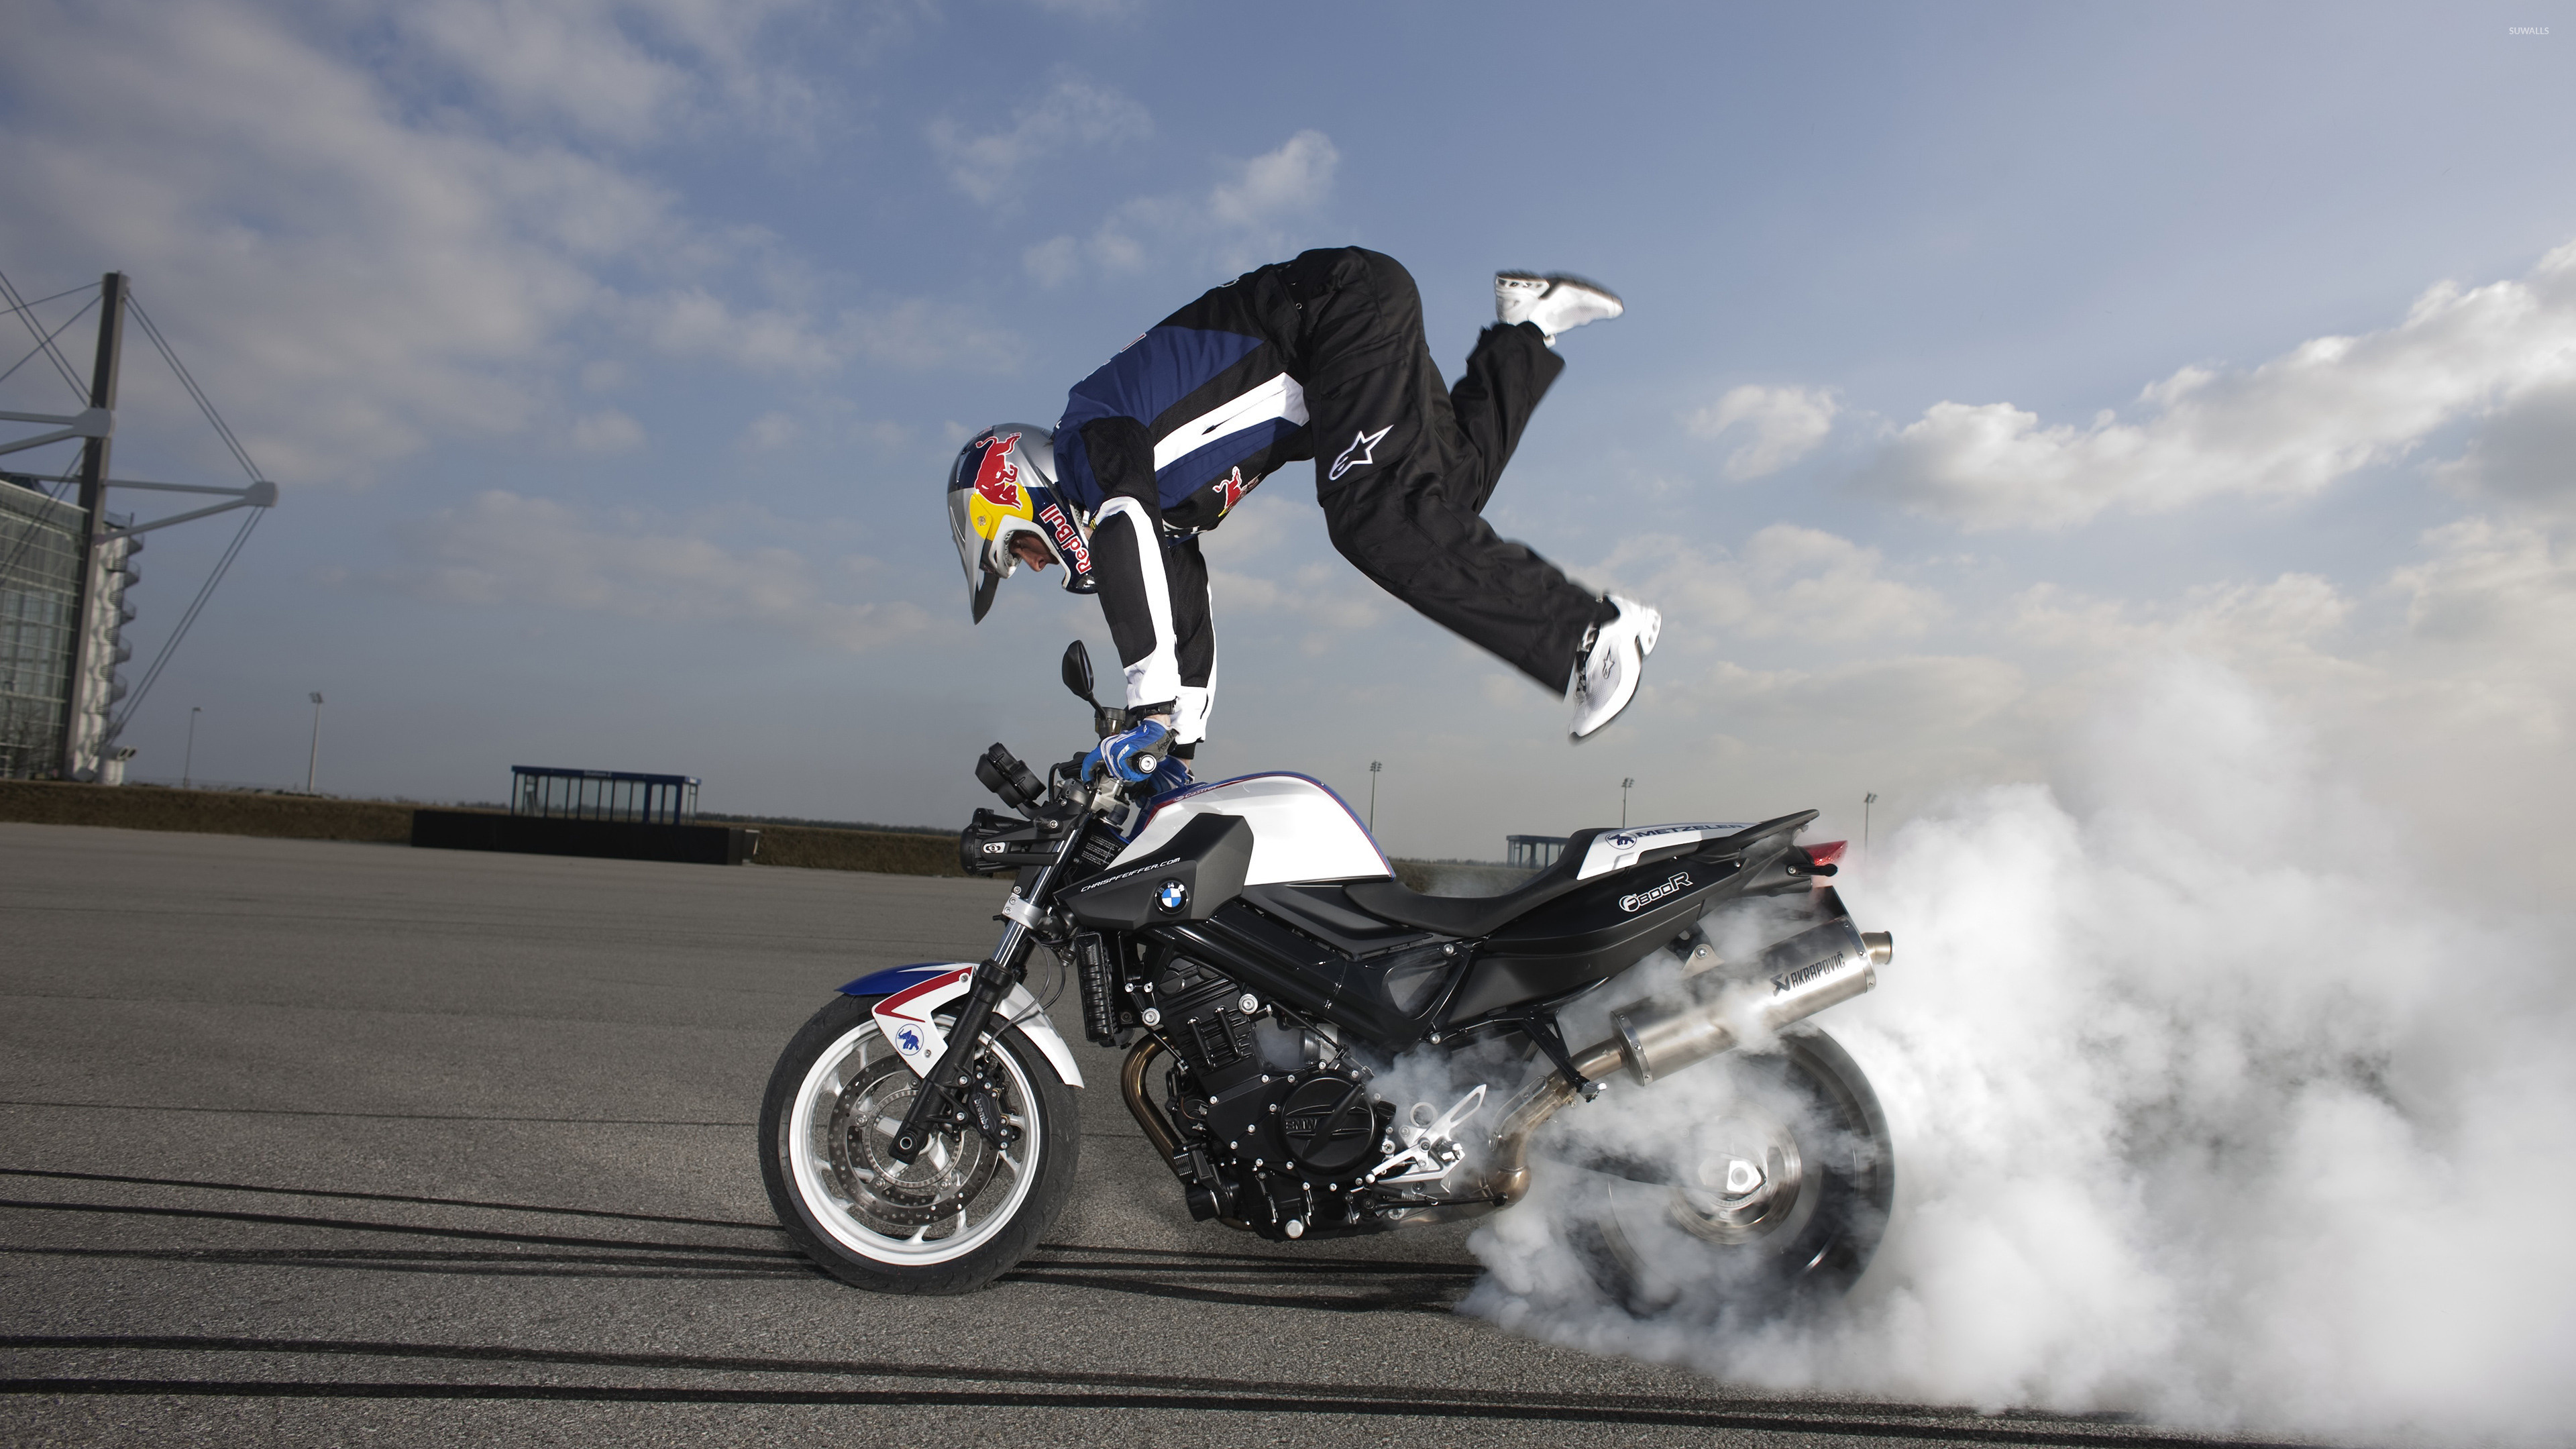 Stunt: Chris Pfeiffer on a BMW F800R, Motorcycle stuntman, Red Bull motorbike stunt riding. 3840x2160 4K Background.